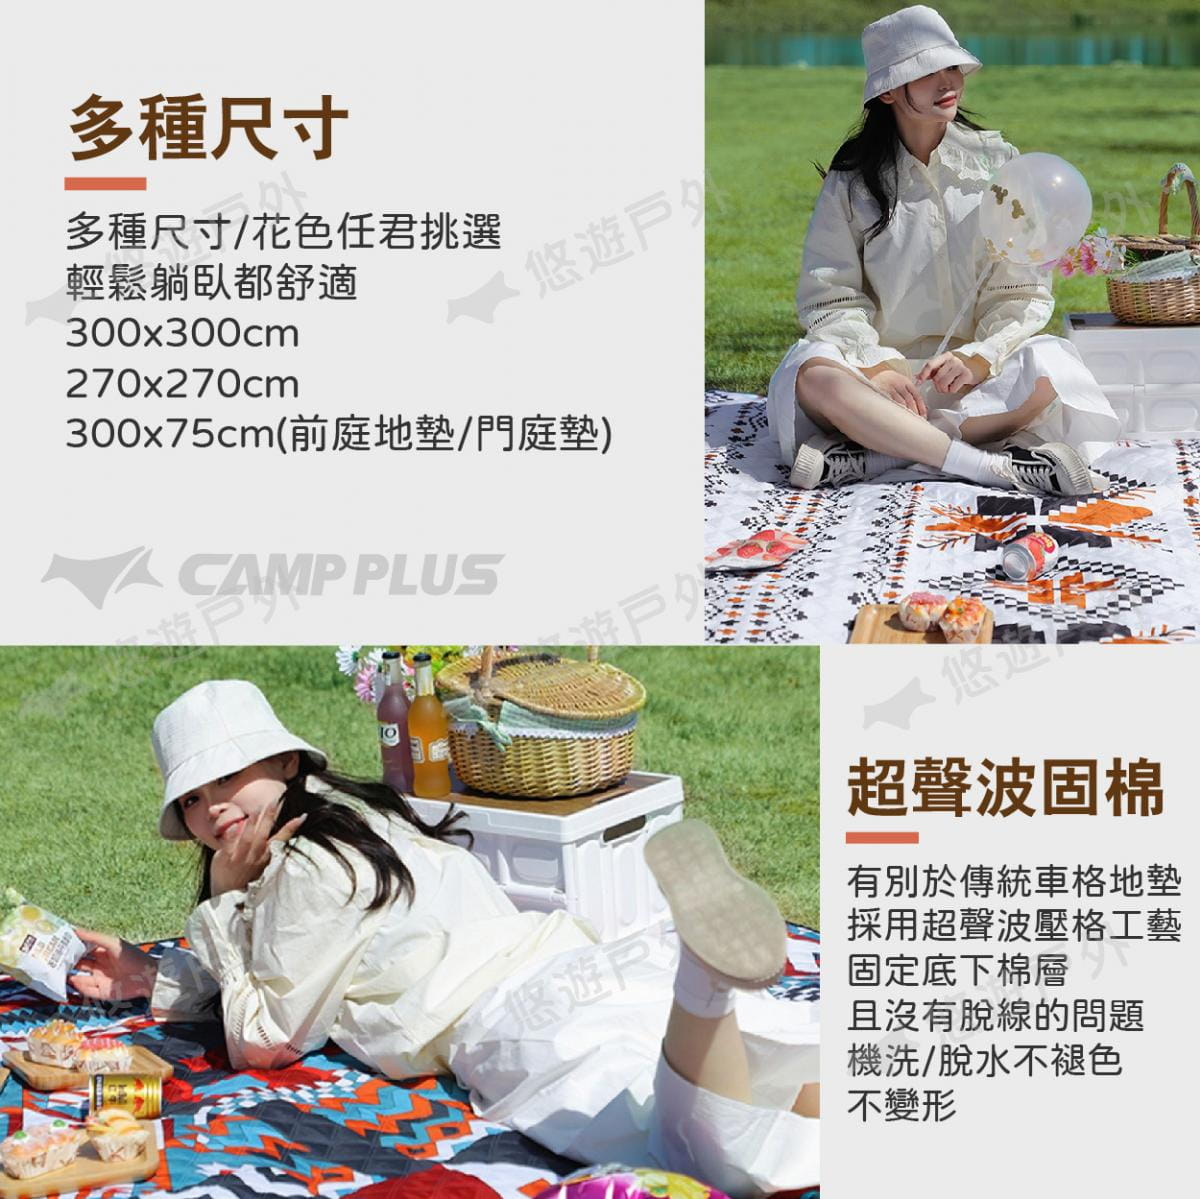 【Camp Plus】超聲波野餐墊 300x300cm_花紋款 悠遊戶外 3